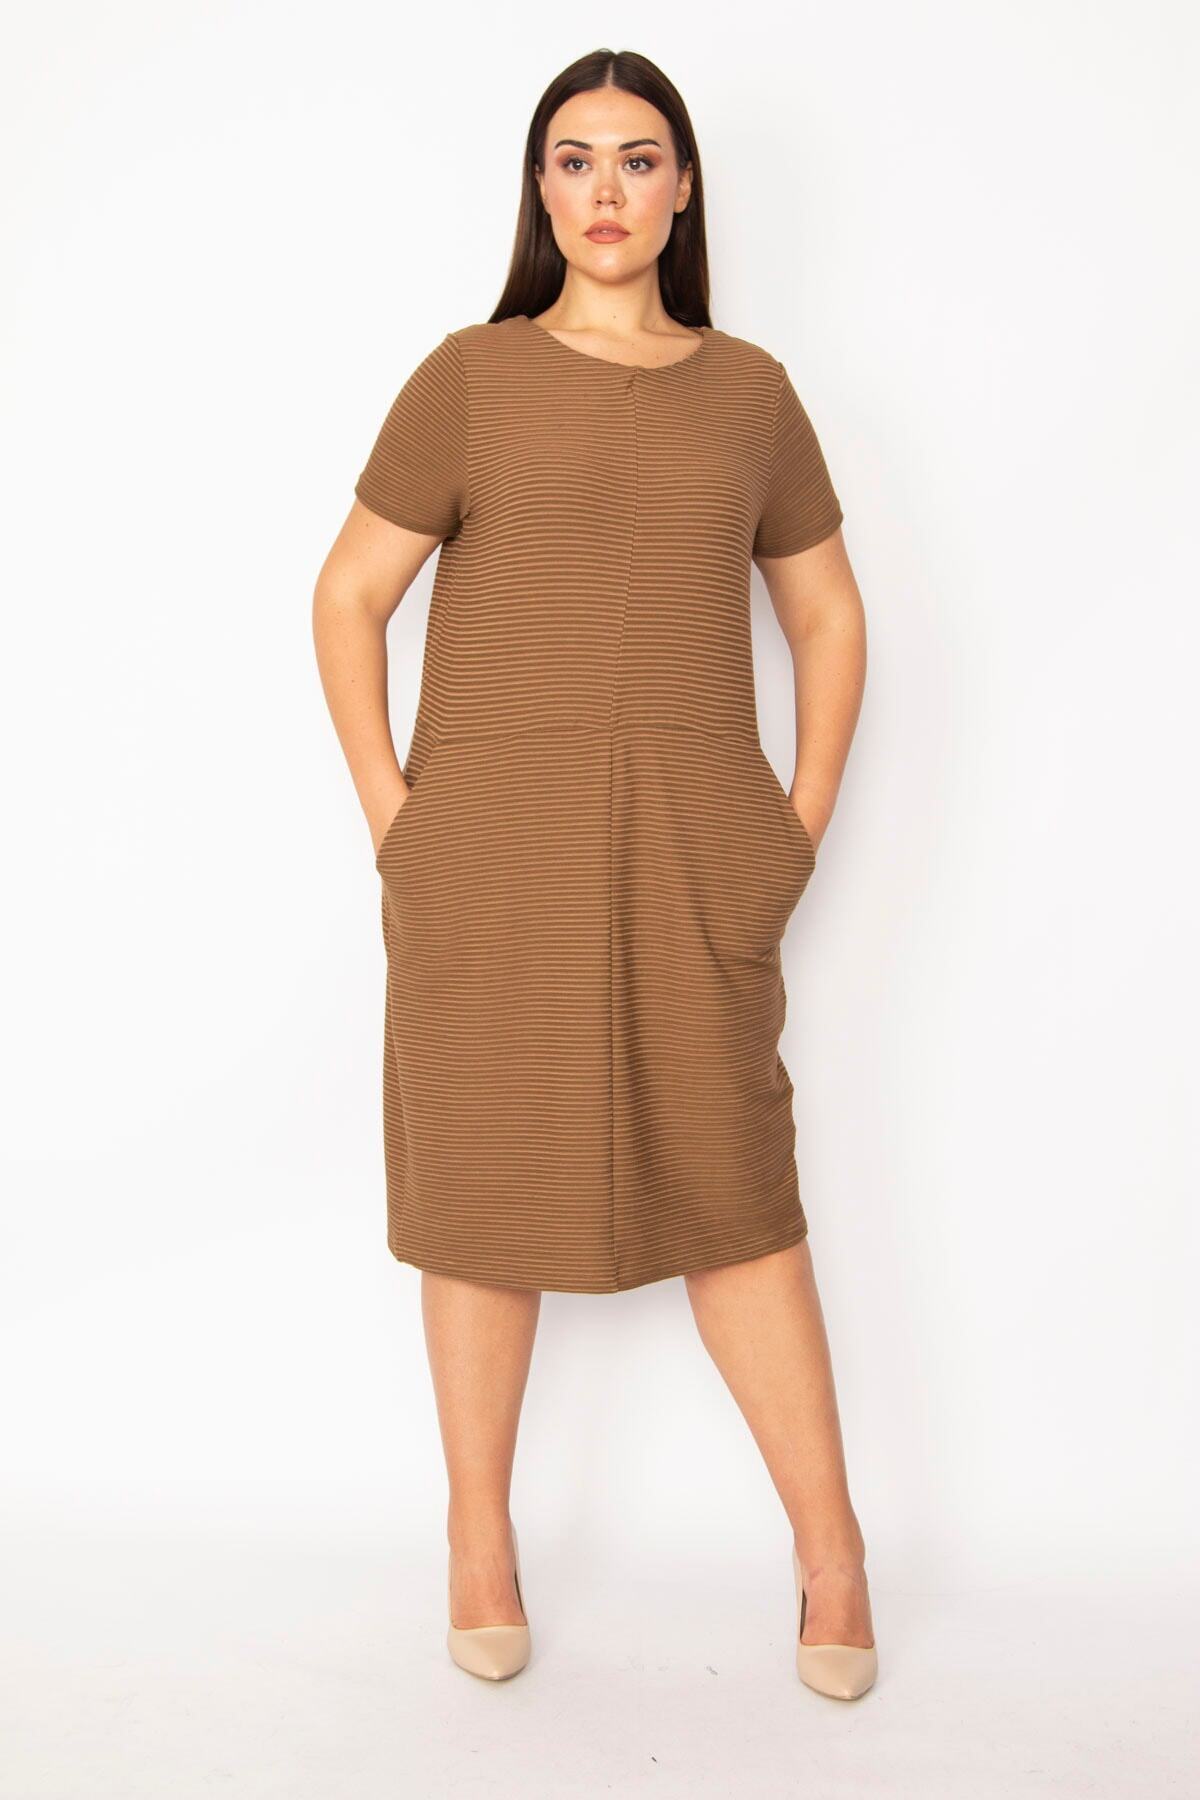 Şans Women's Plus Size Milky Brown Self Striped Pocket Dress